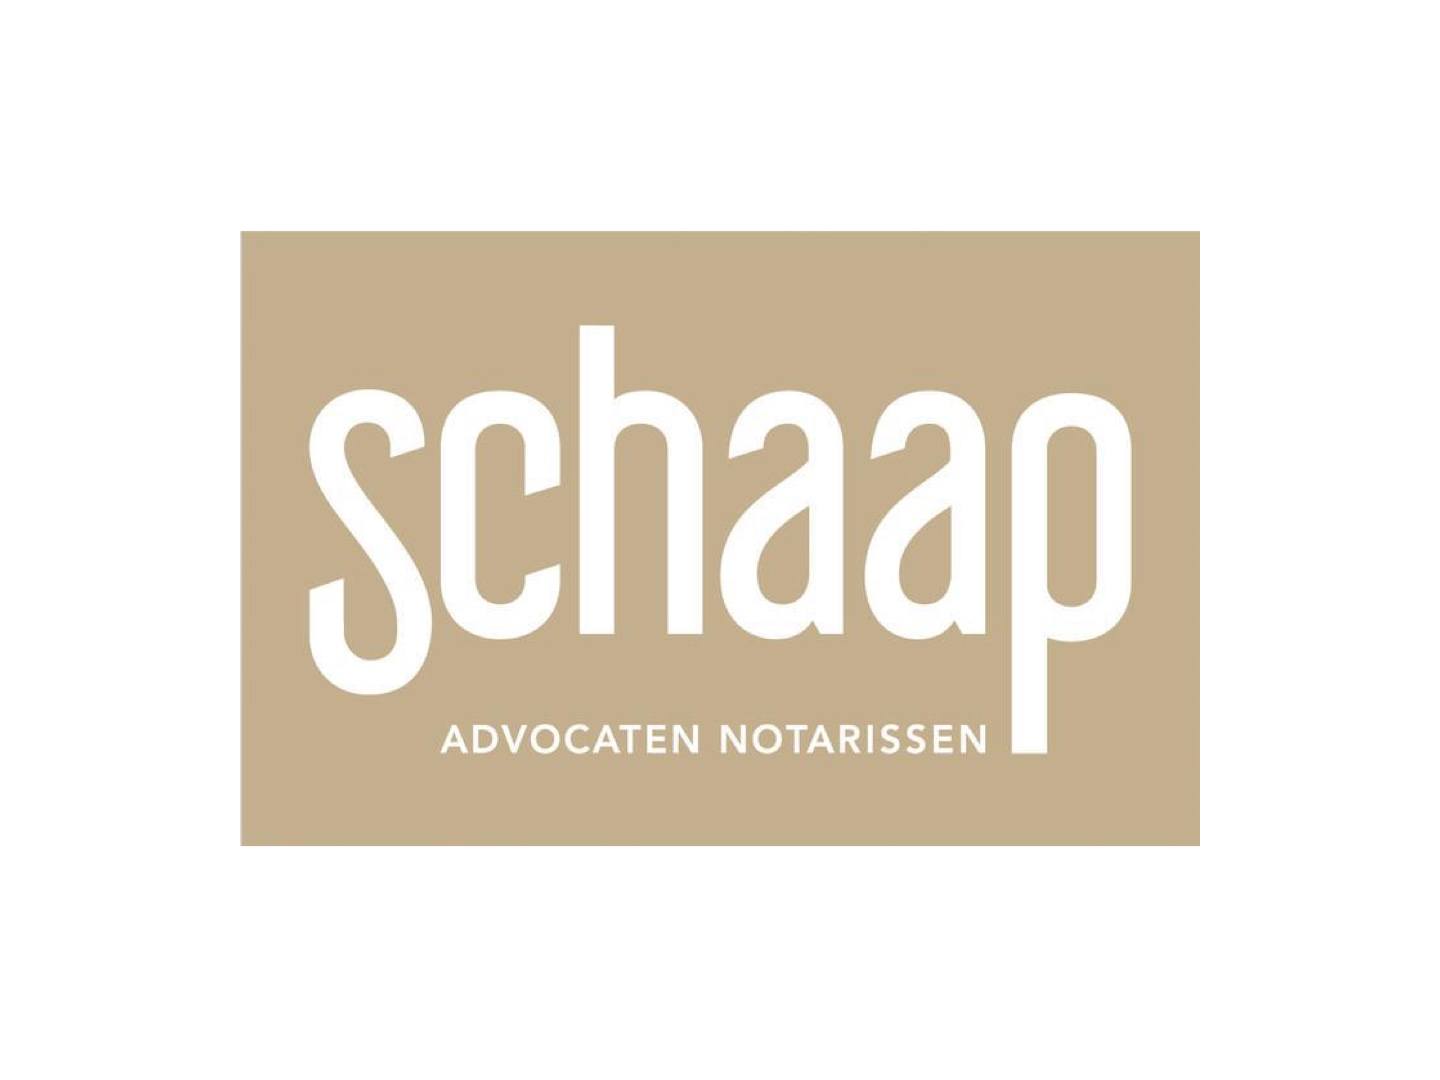 Schaap Advocaten Notarissen logo